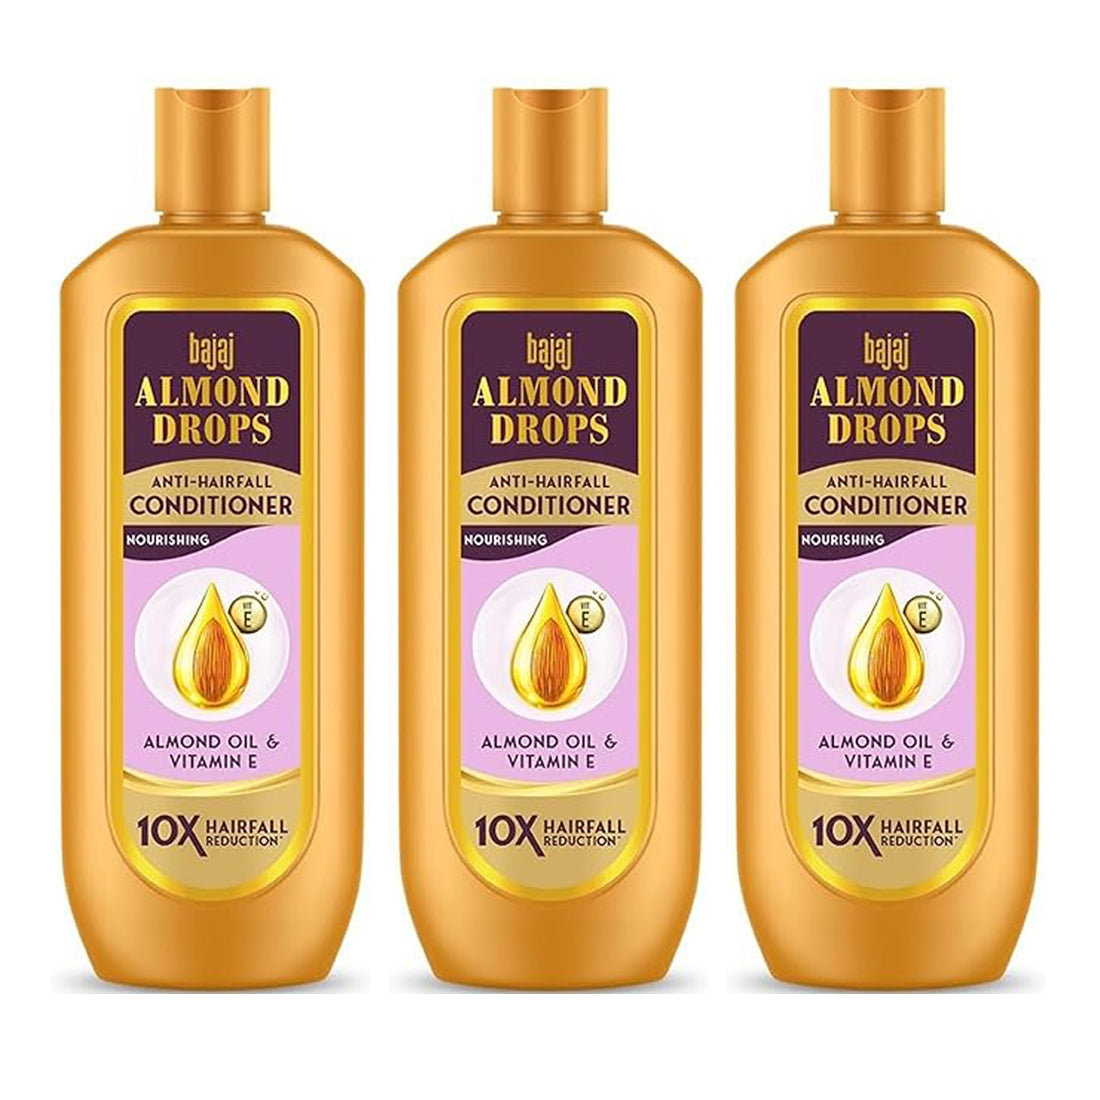 Bajaj Almond Drops Anti-Hairfall Conditioner 175ml Pack Of 3